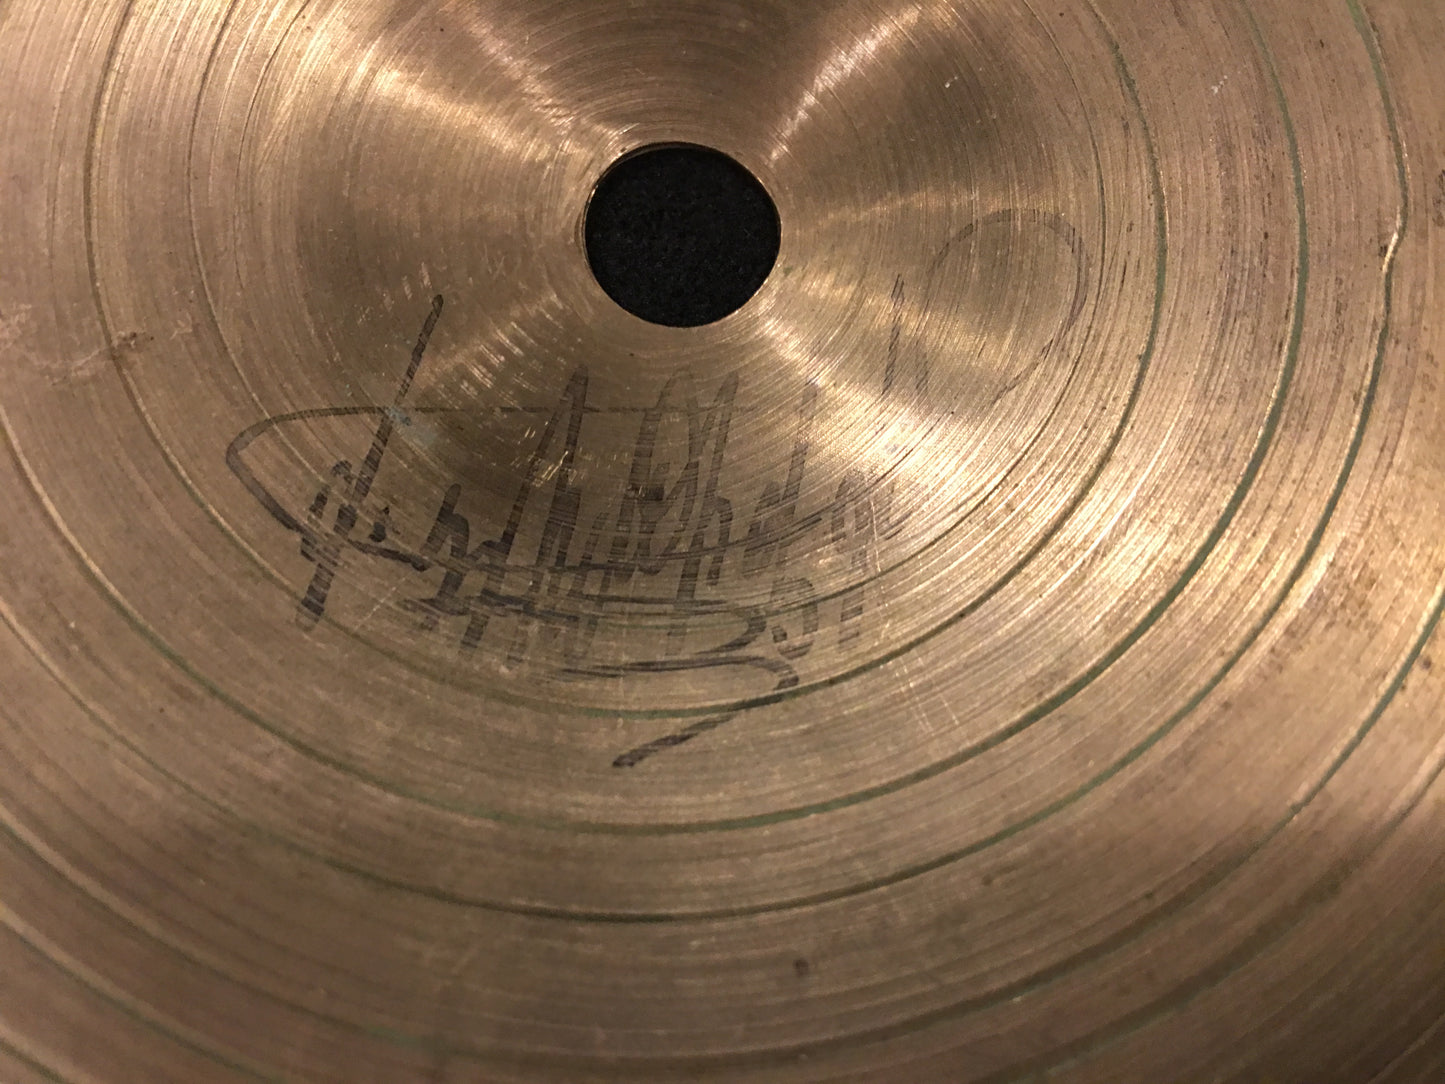 14" Vintage Zildjian K Istanbul Hi-Hat Cymbals 844g/936g #483